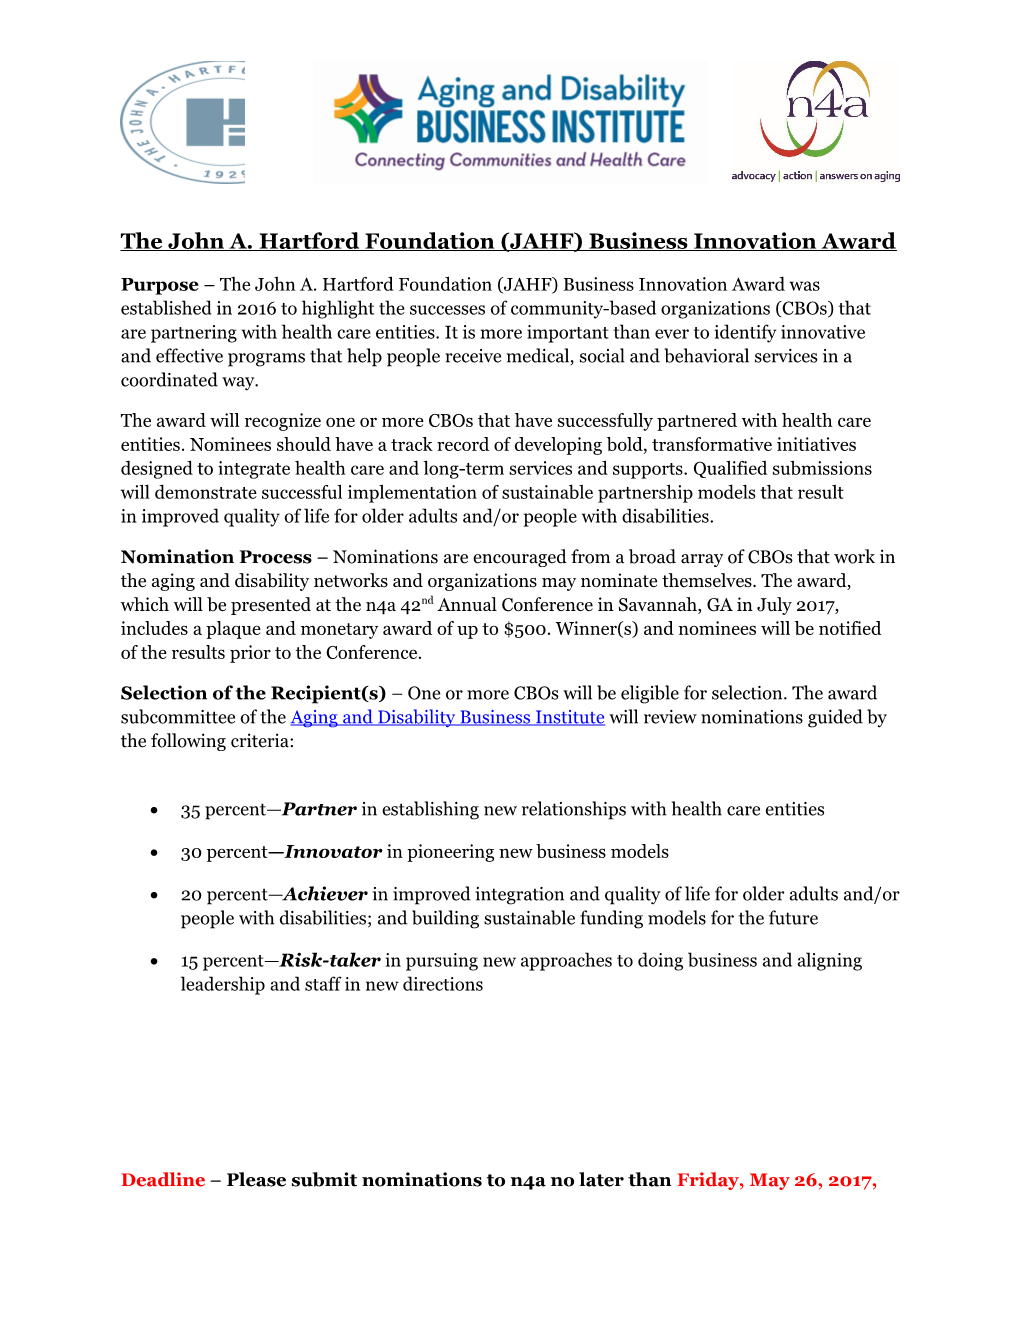 The John A. Hartford Foundation (JAHF) Business Innovation Award